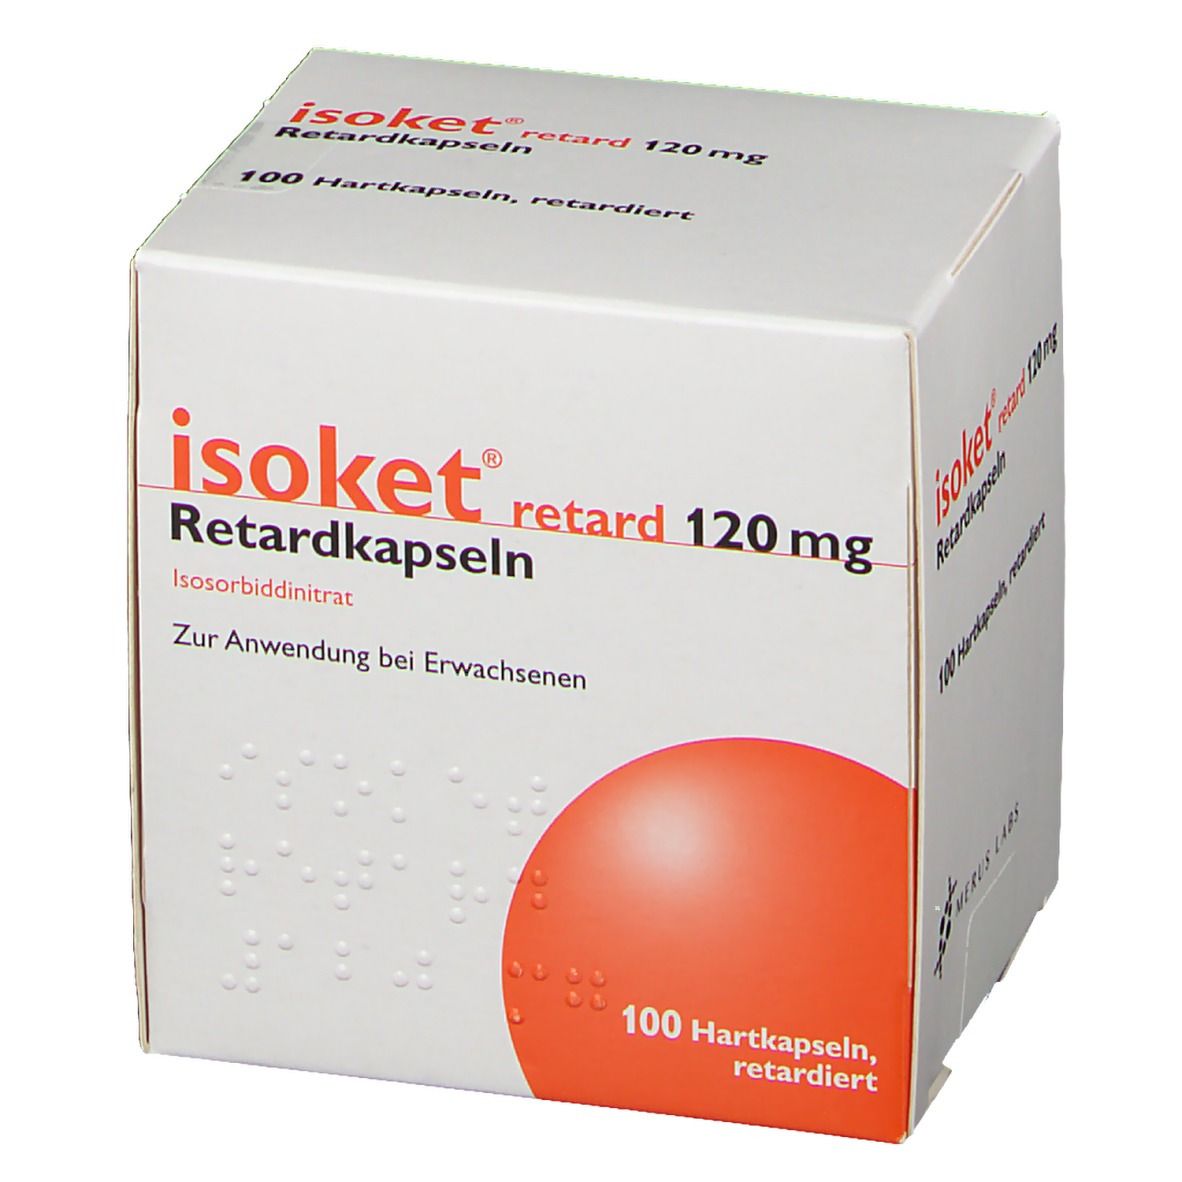 isoket® retard 120 mg